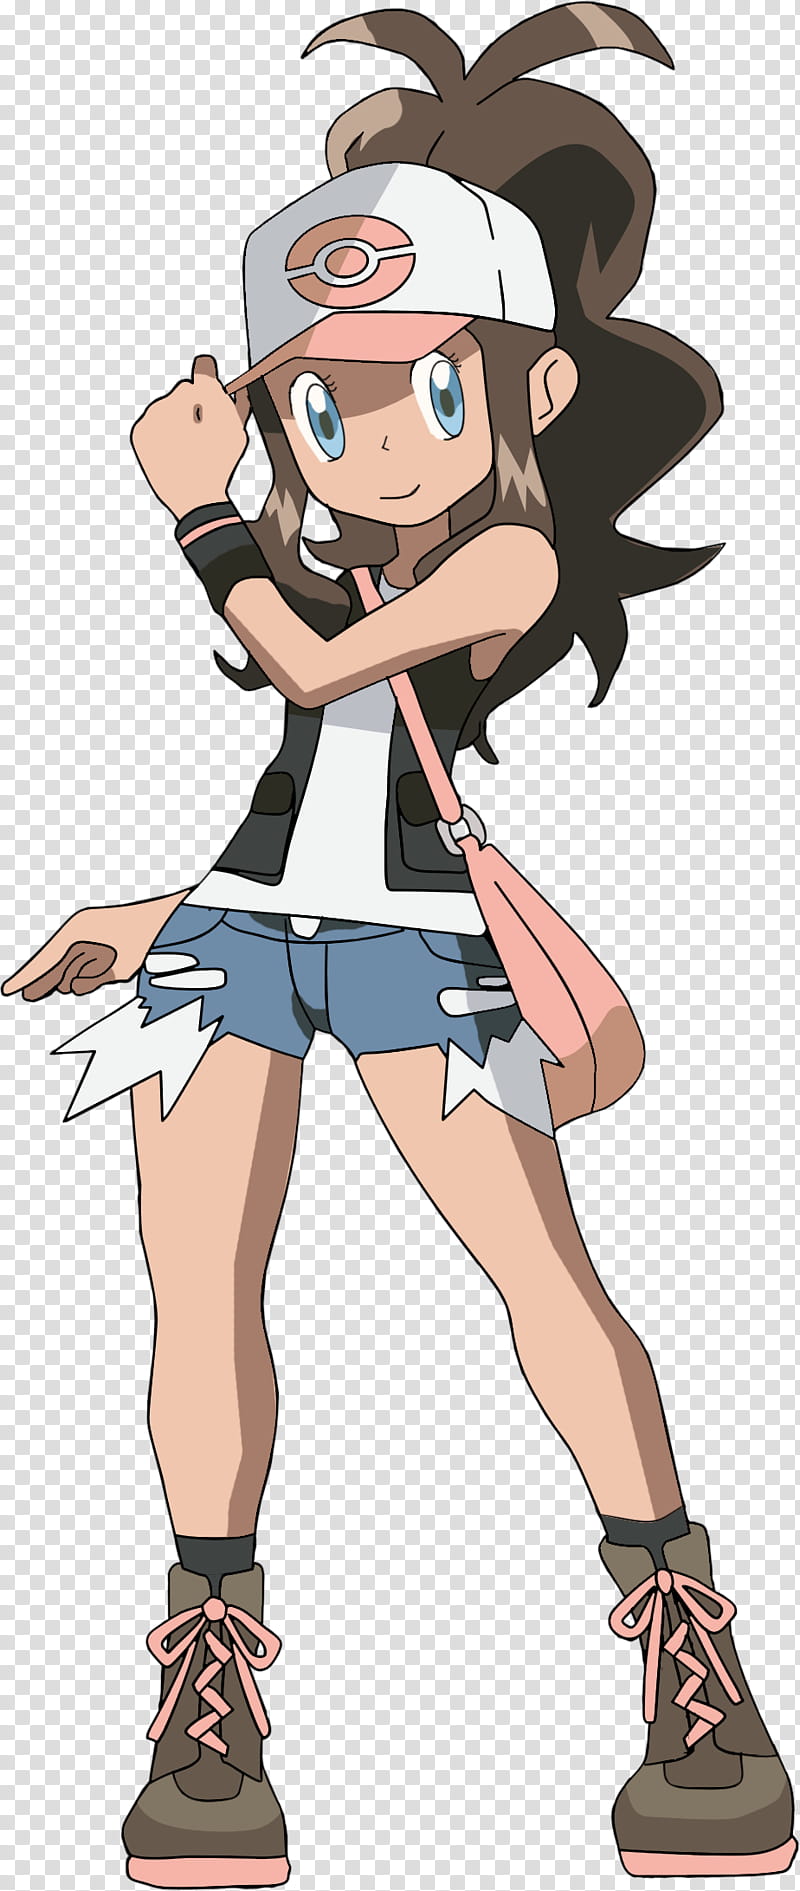 Touko Artwork Style Anime, Hilda of Pokemon transparent background PNG clipart